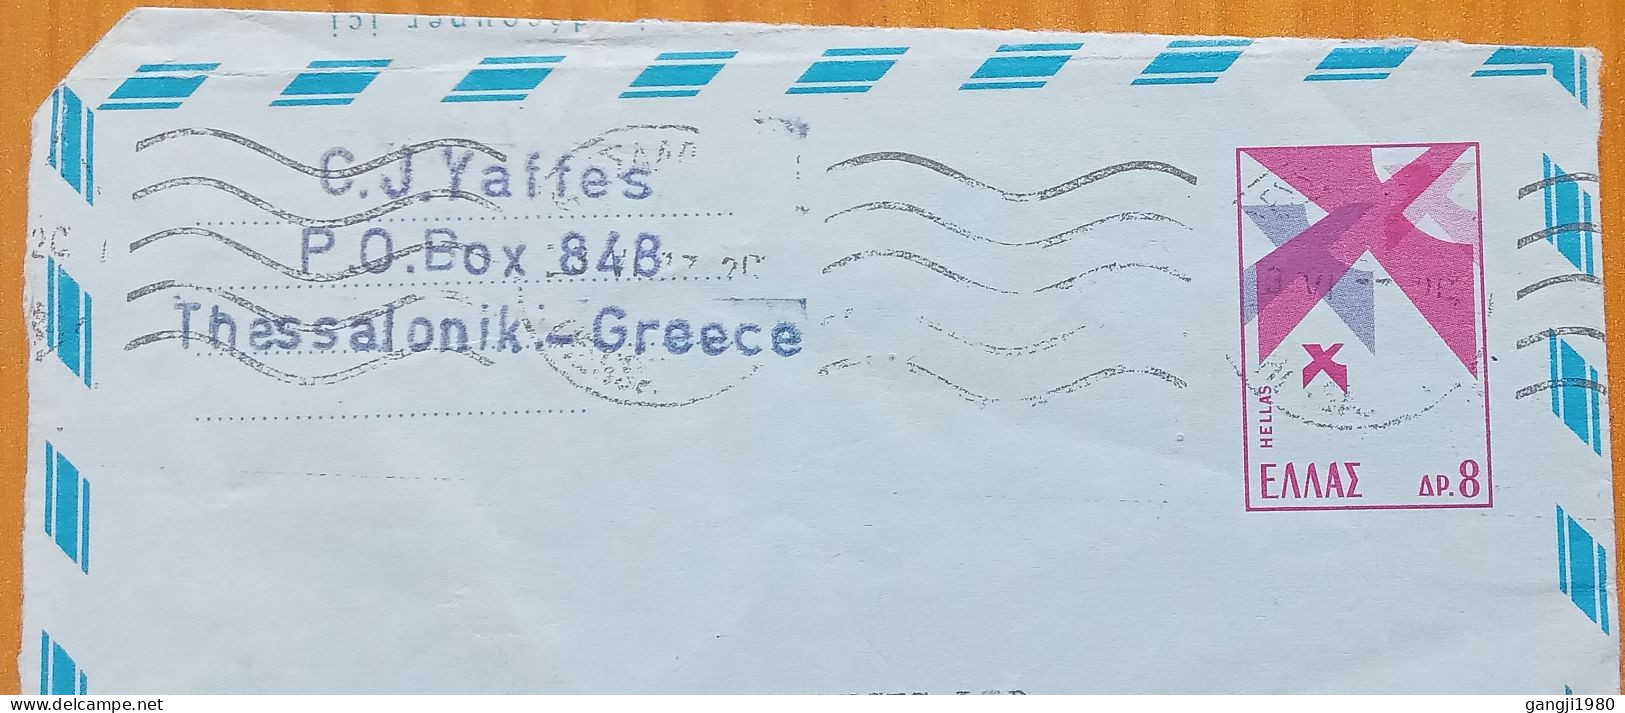 GREECE 1977, STATIONERY, AEROGRAMME, VIEW THESSALONIK CITY, 8 DRACHMA VALUE, BIRD SYMBOL, USED TO ENGLAND, - Briefe U. Dokumente